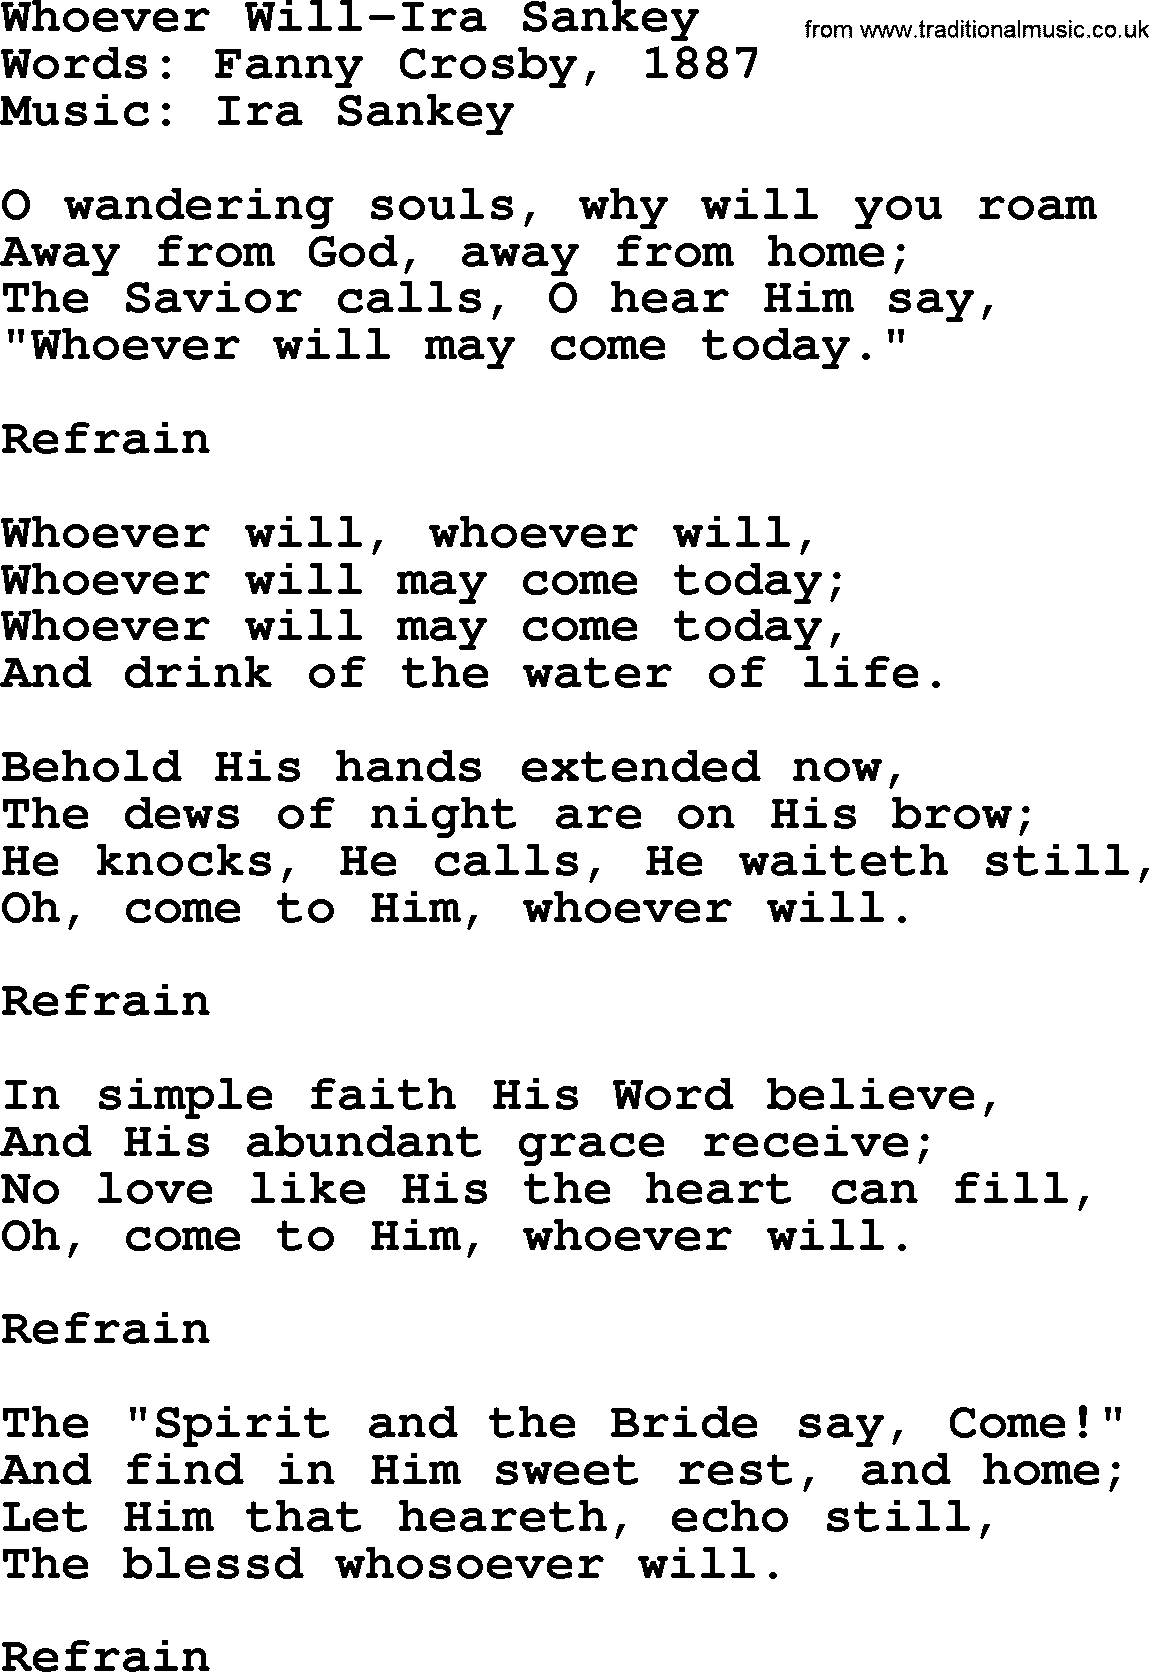 Ira Sankey hymn: Whoever Will-Ira Sankey, lyrics